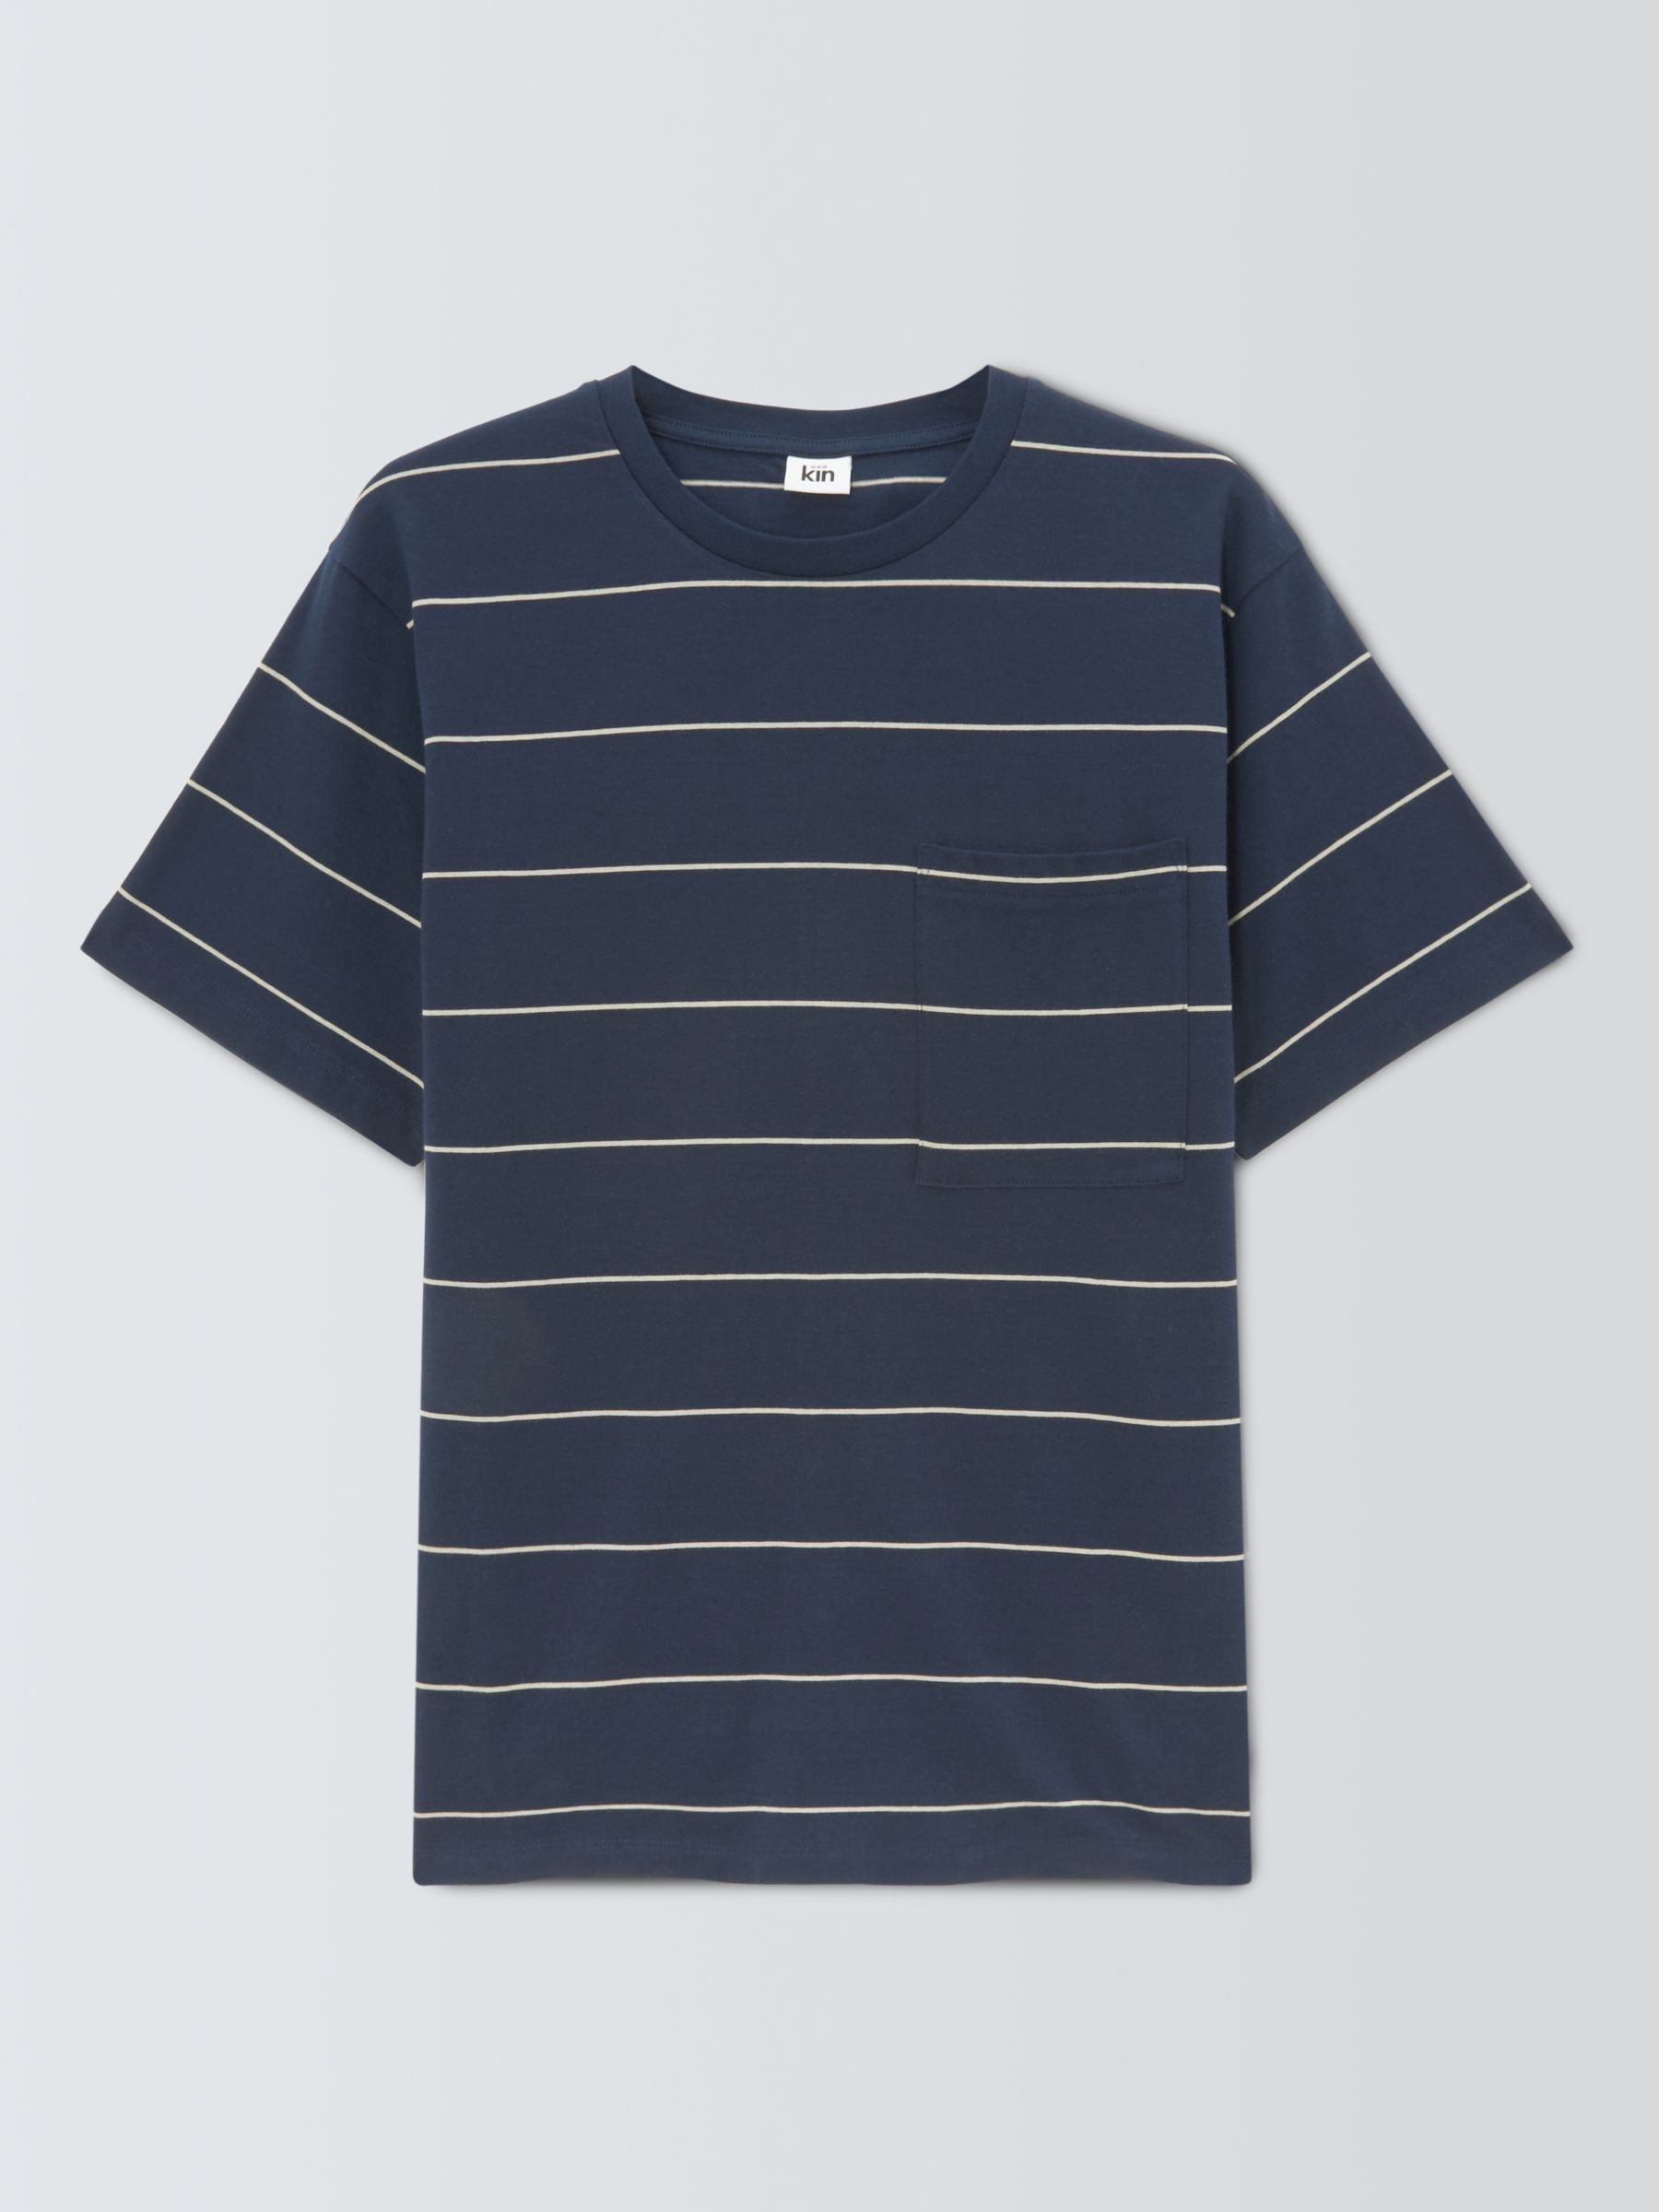 Kin Space Stripe Pocket Short Sleeve T-Shirt, Navy/Yellow, S